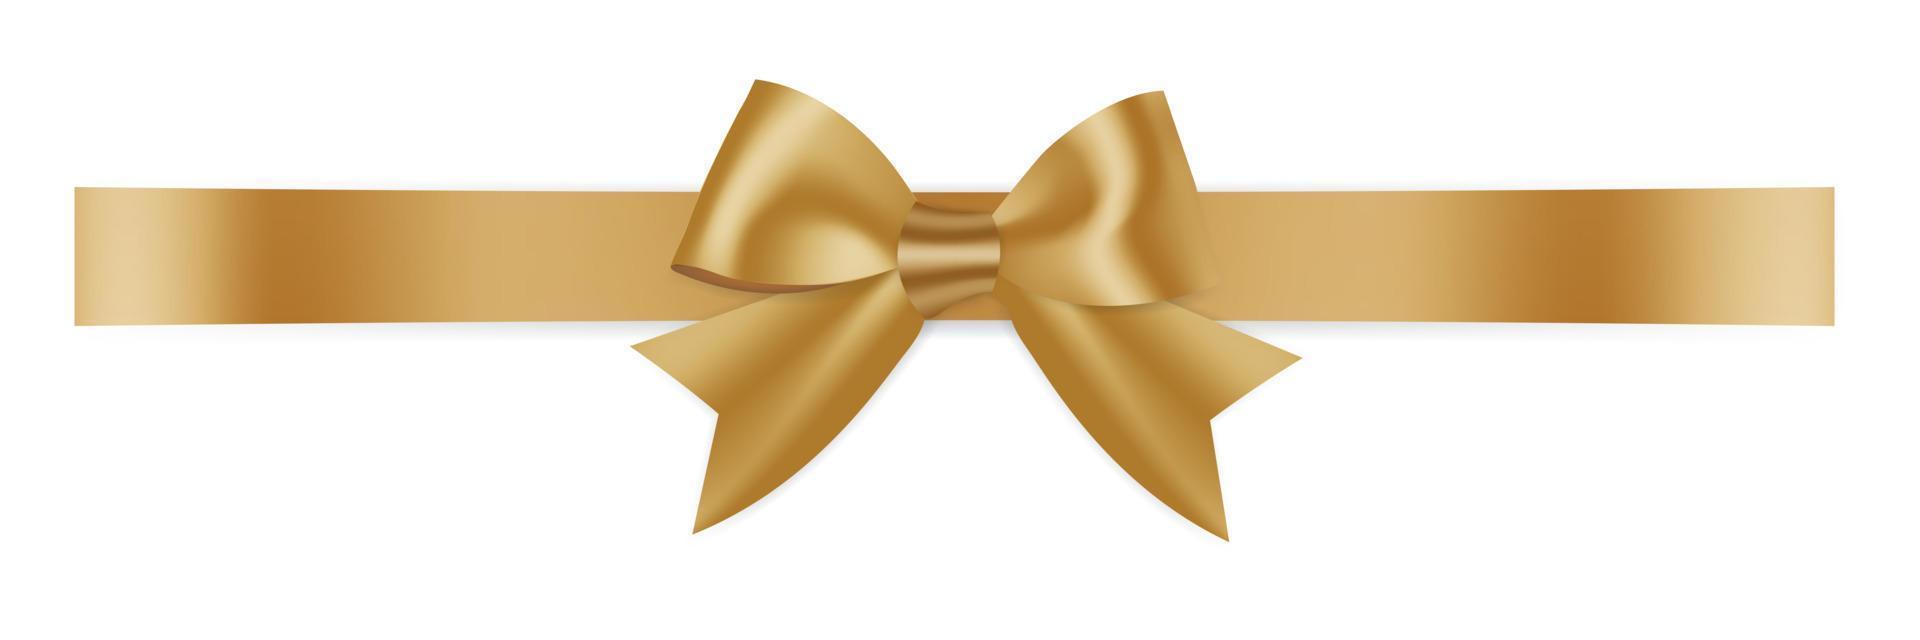 Golden Bow tie ribbon vector